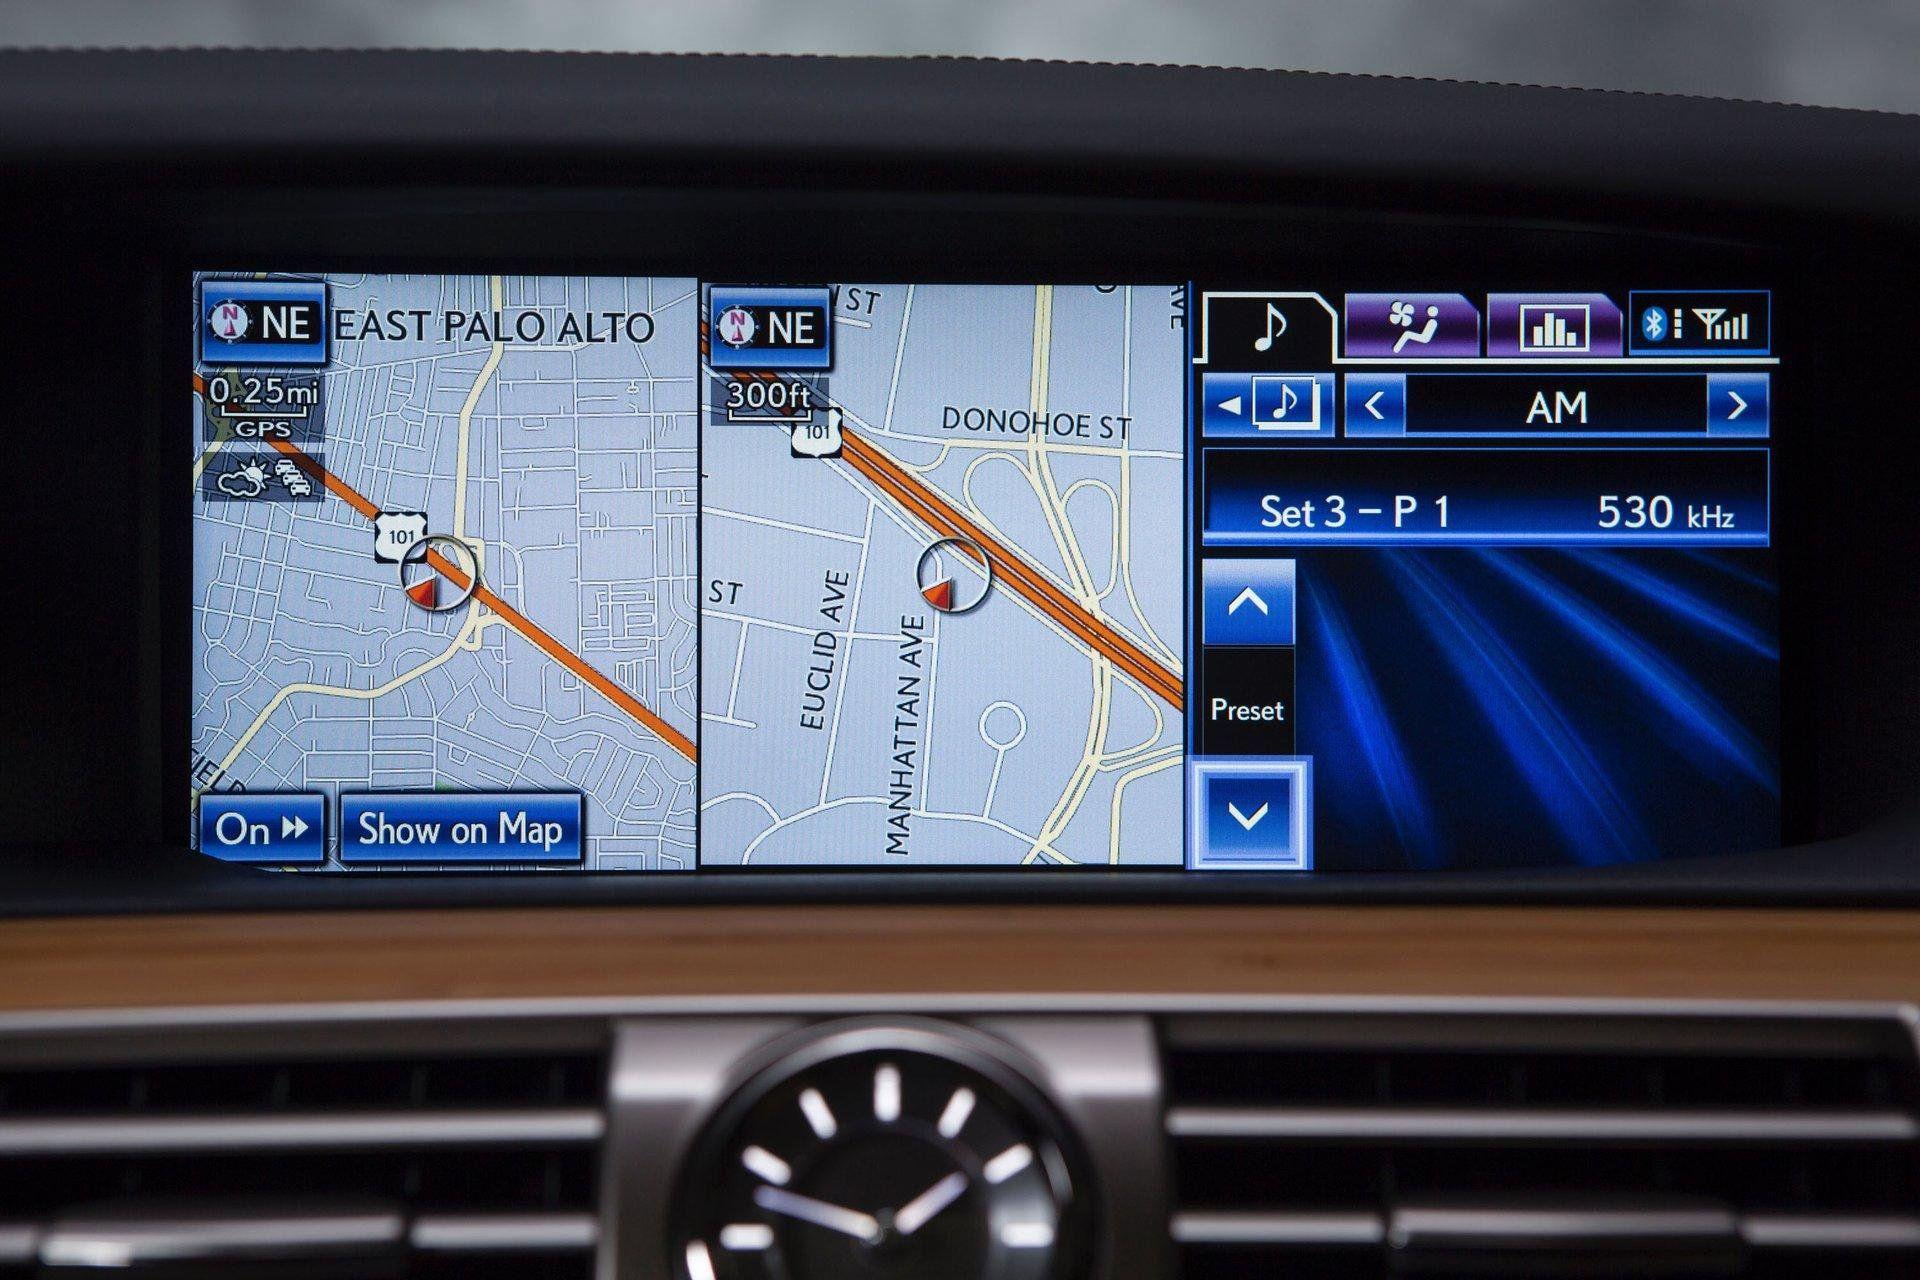 Lexus LS 600h L Gps navigation device HD Wallpaper for iPhone